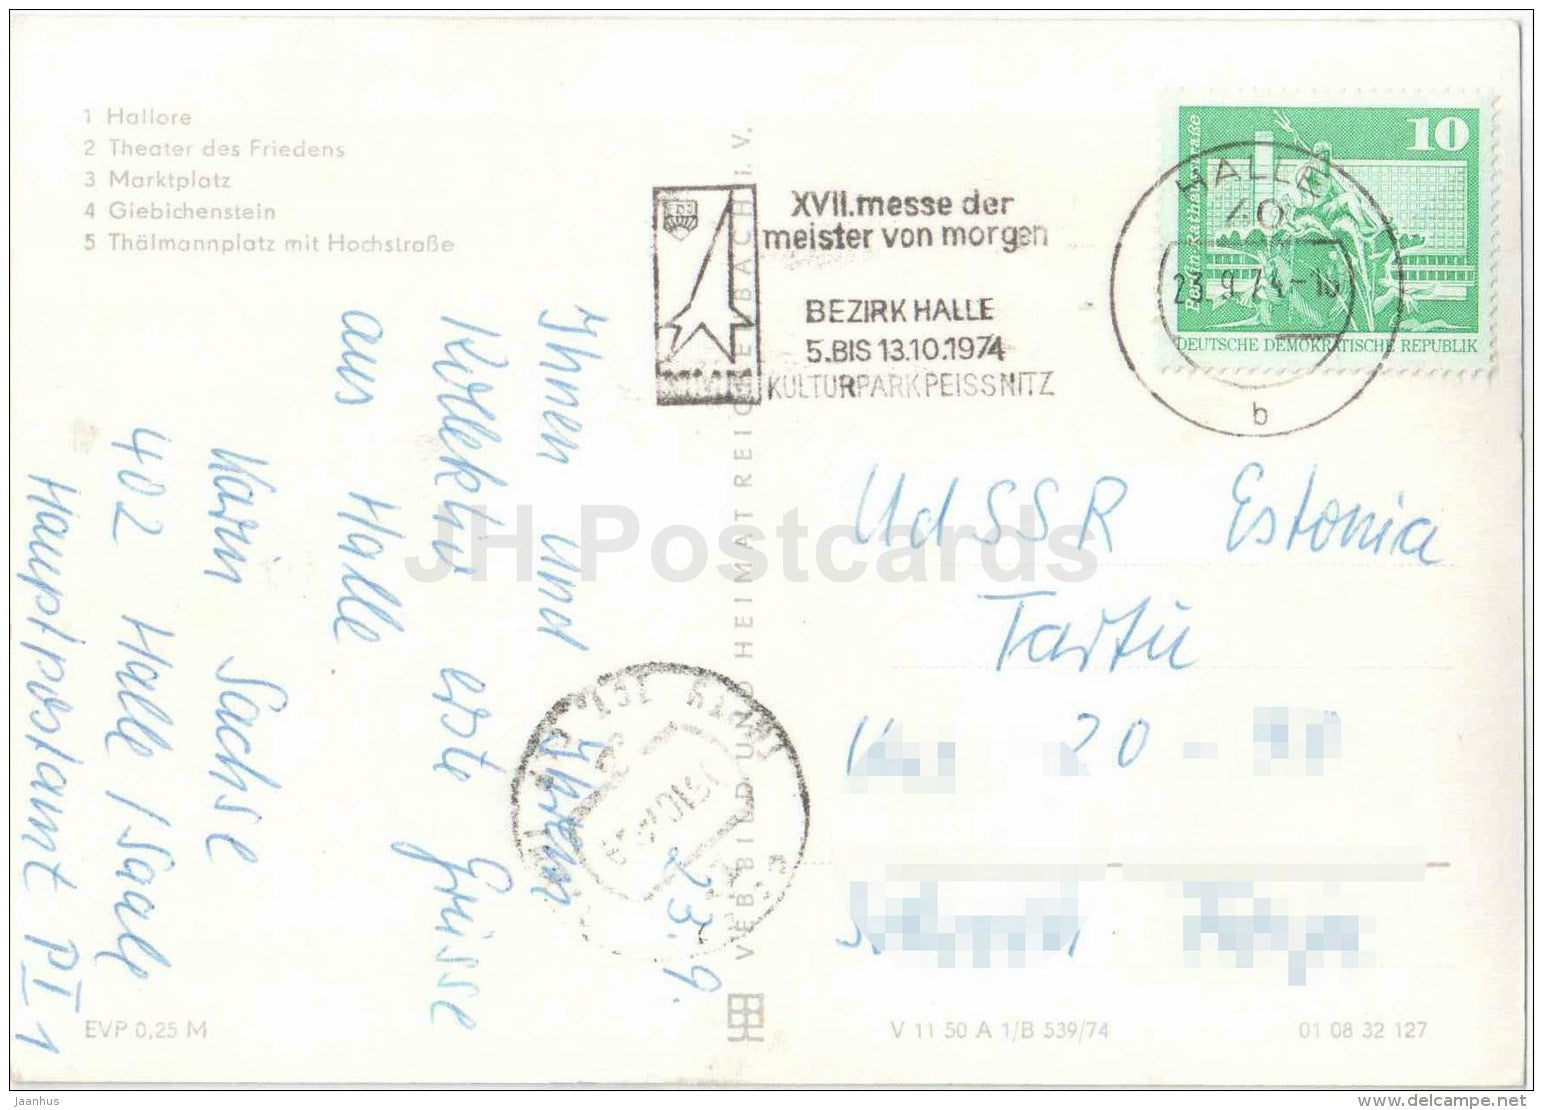 Gruss aus Halle Saale - Hallore - Theatre - Marktplatz - Germany - sent from Germany Halle to Estonia Tartu 1974 - JH Postcards